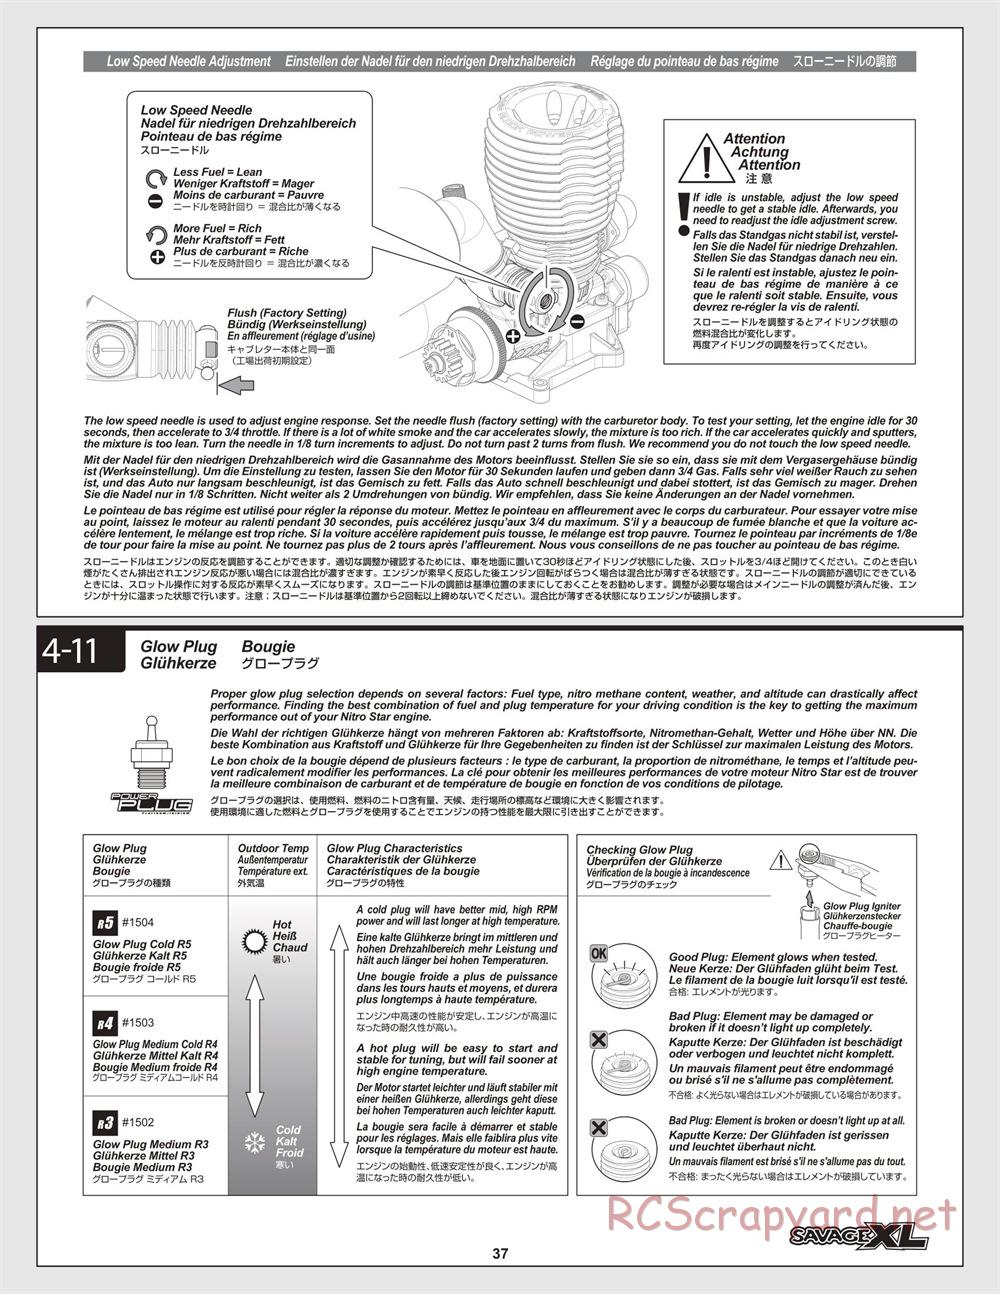 HPI - Savage XL 5.9 - Manual - Page 37